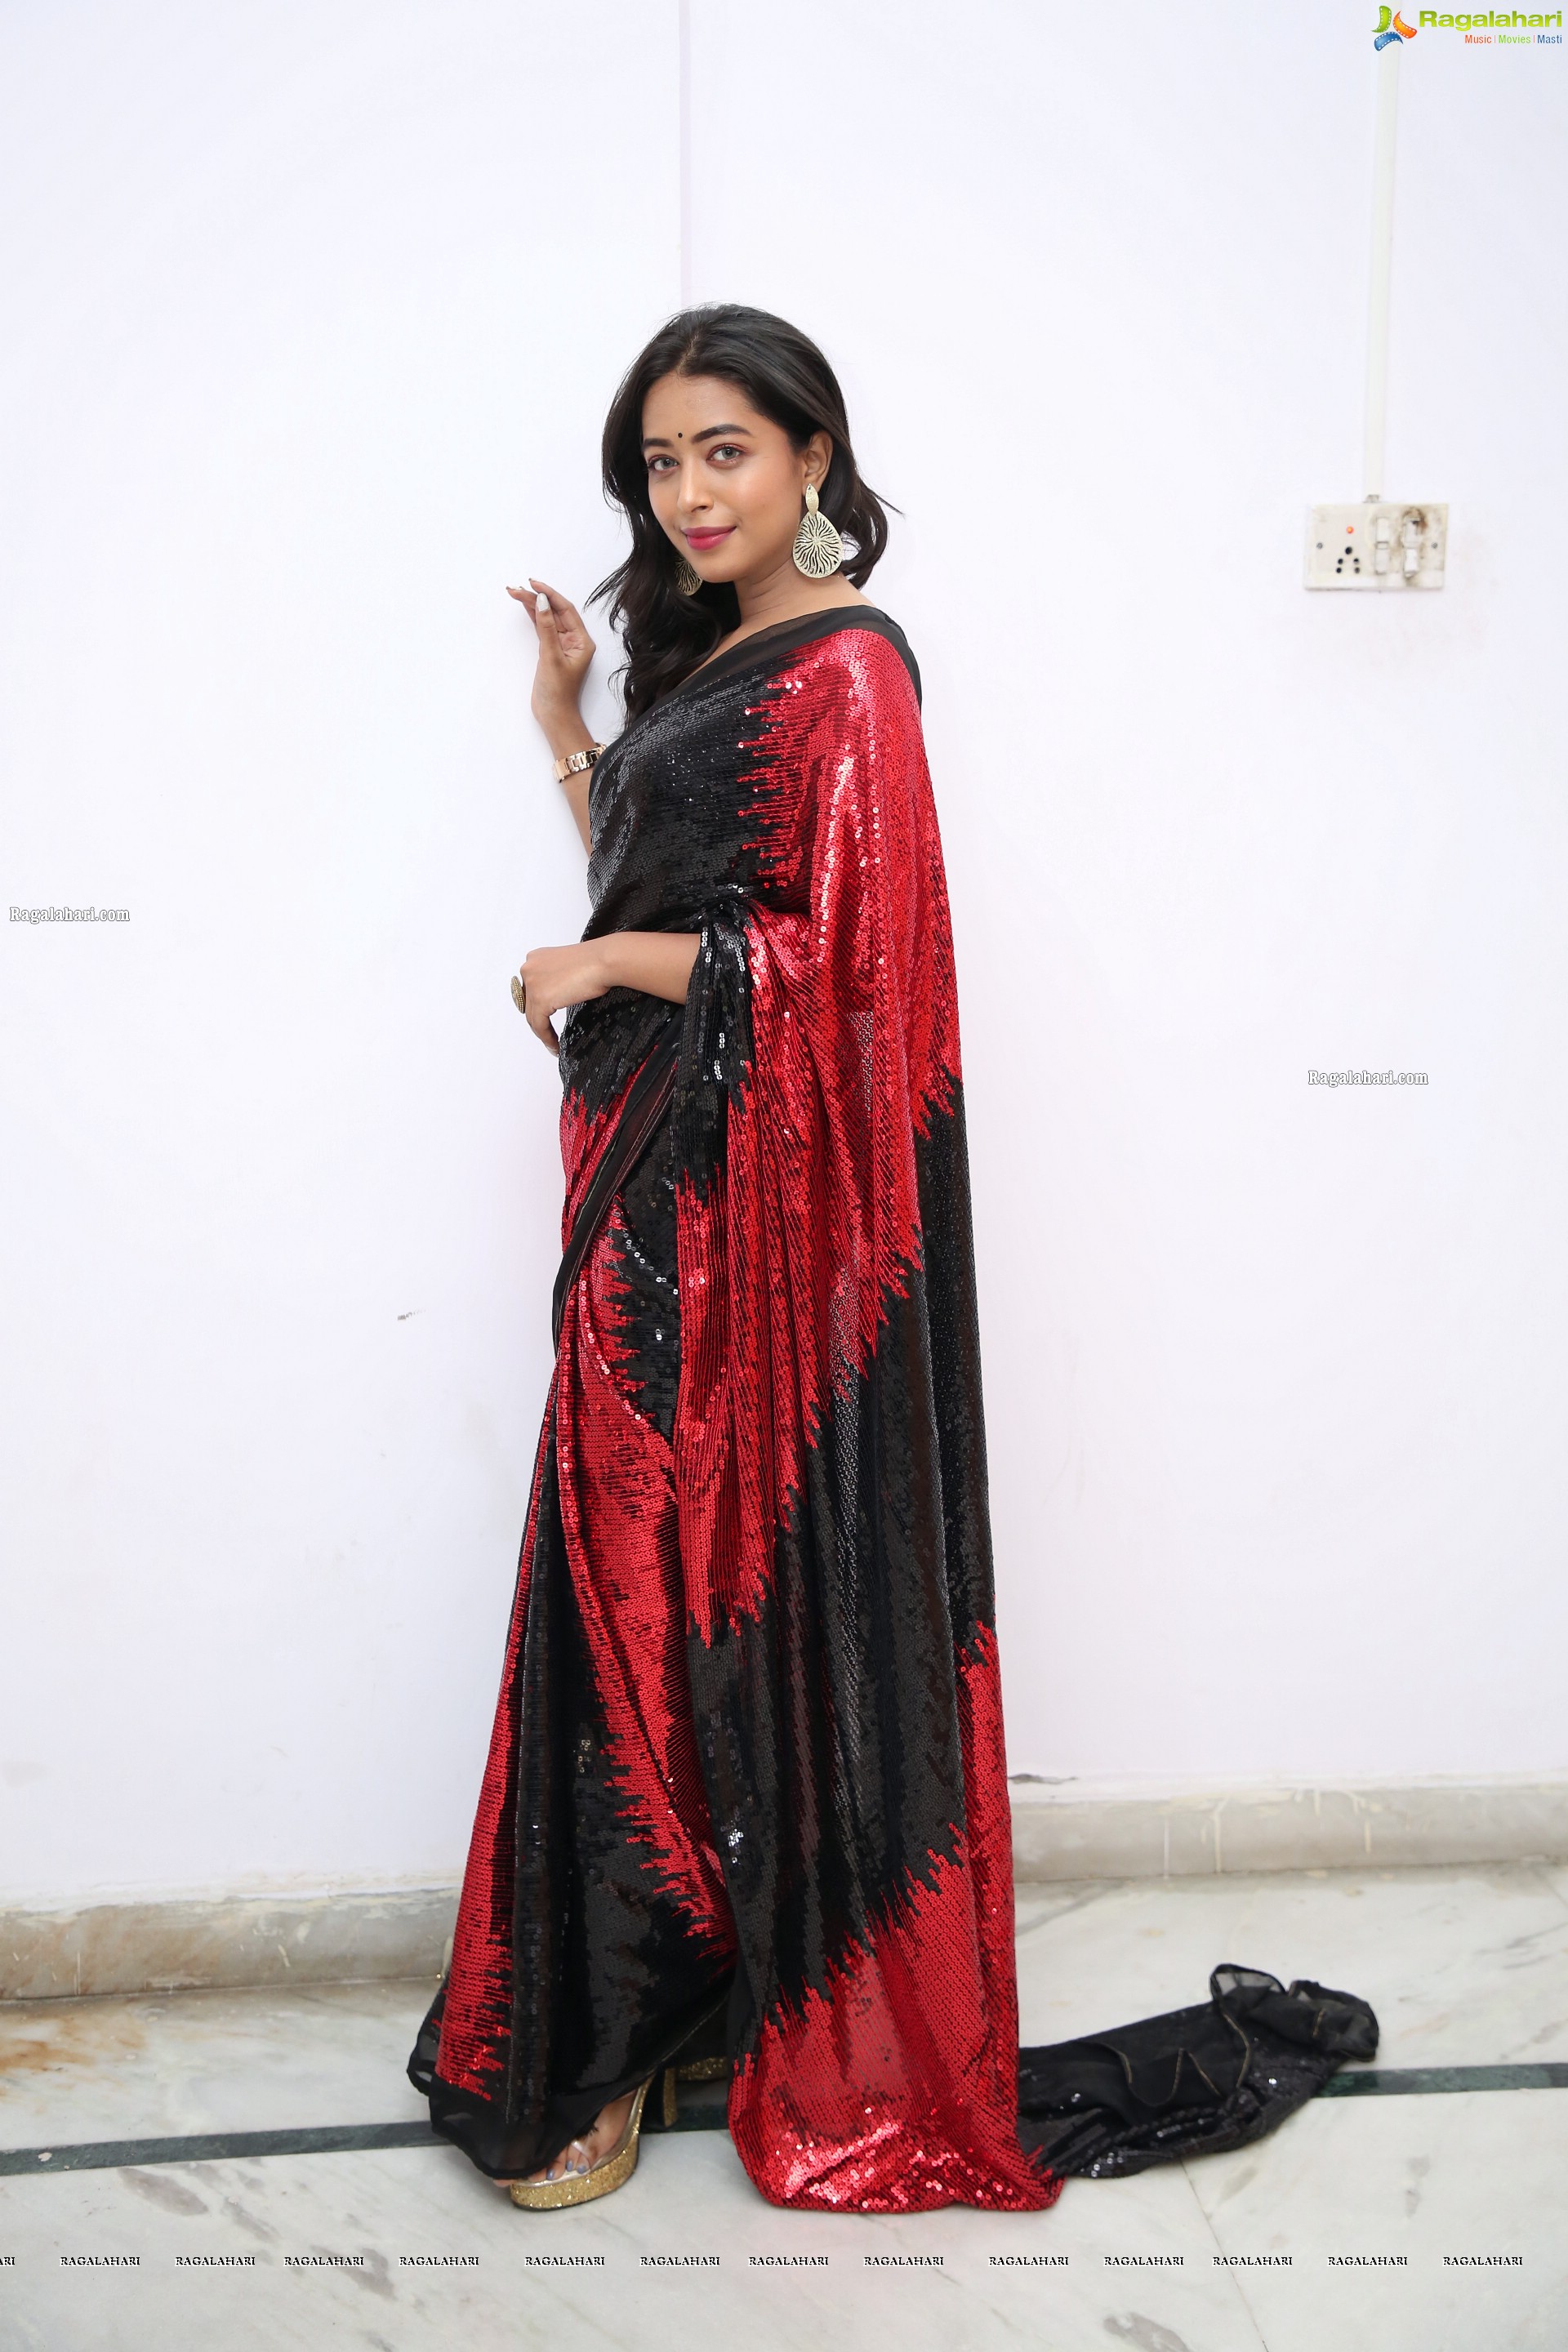 Rittika Chakraborty in Black and Red Saree, HD Photo Gallery